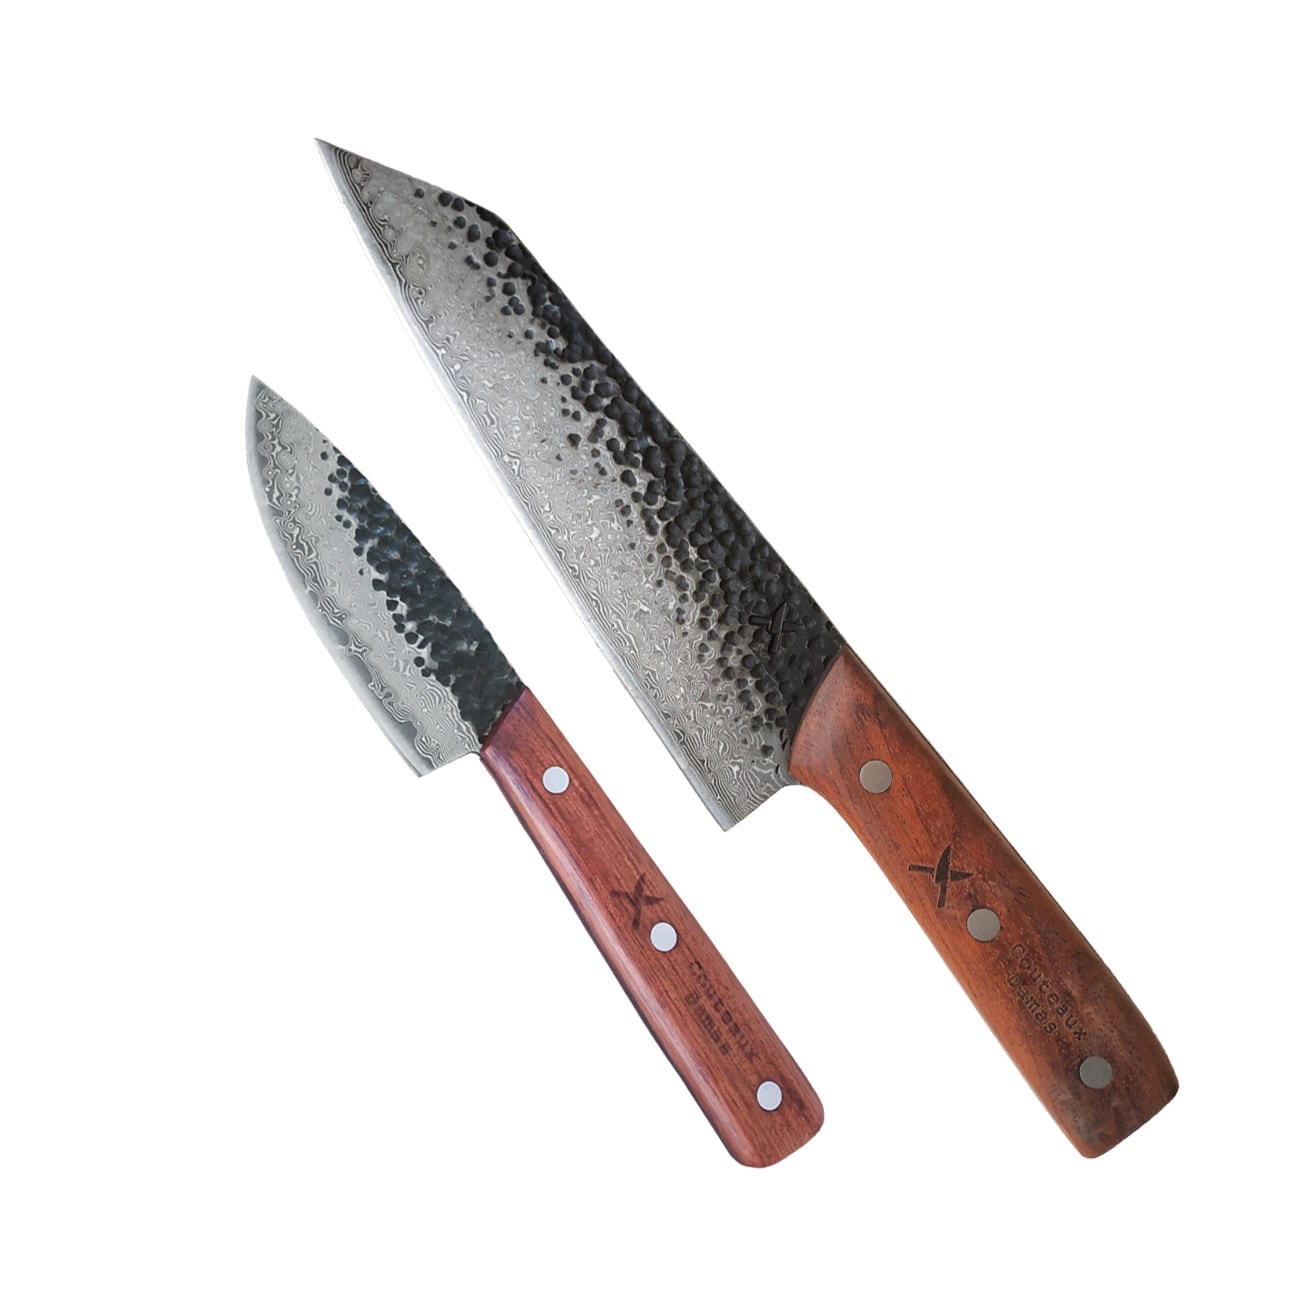 https://damas-knives.com/wp-content/uploads/2021/03/pattern-welded-duo-set.jpg